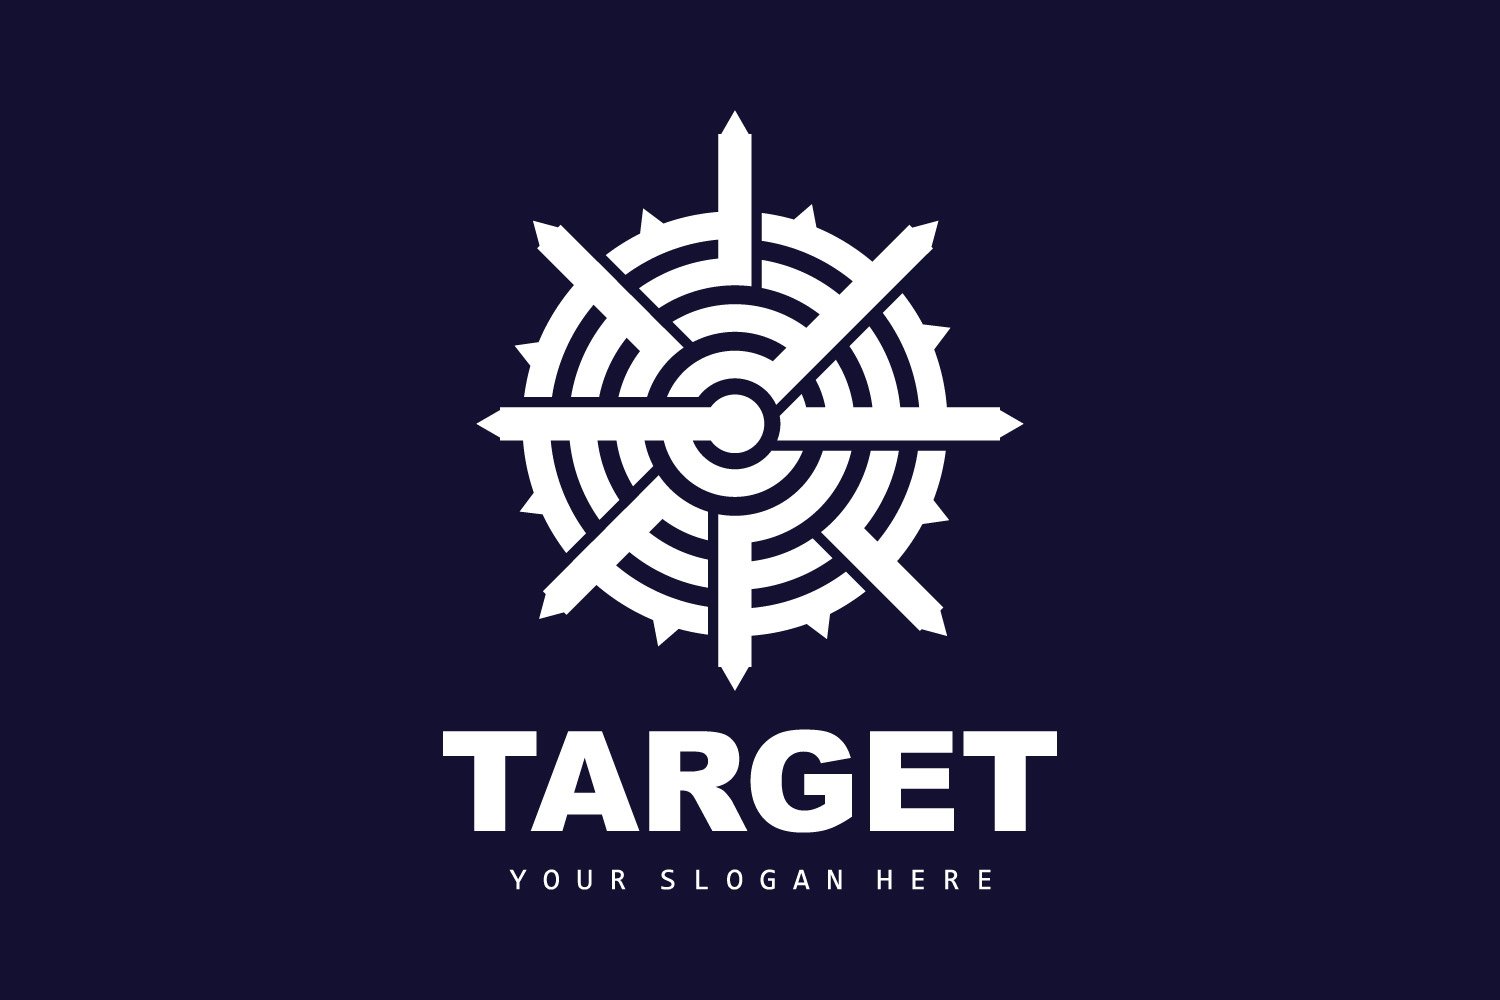 Template #405720 Vector Target Webdesign Template - Logo template Preview